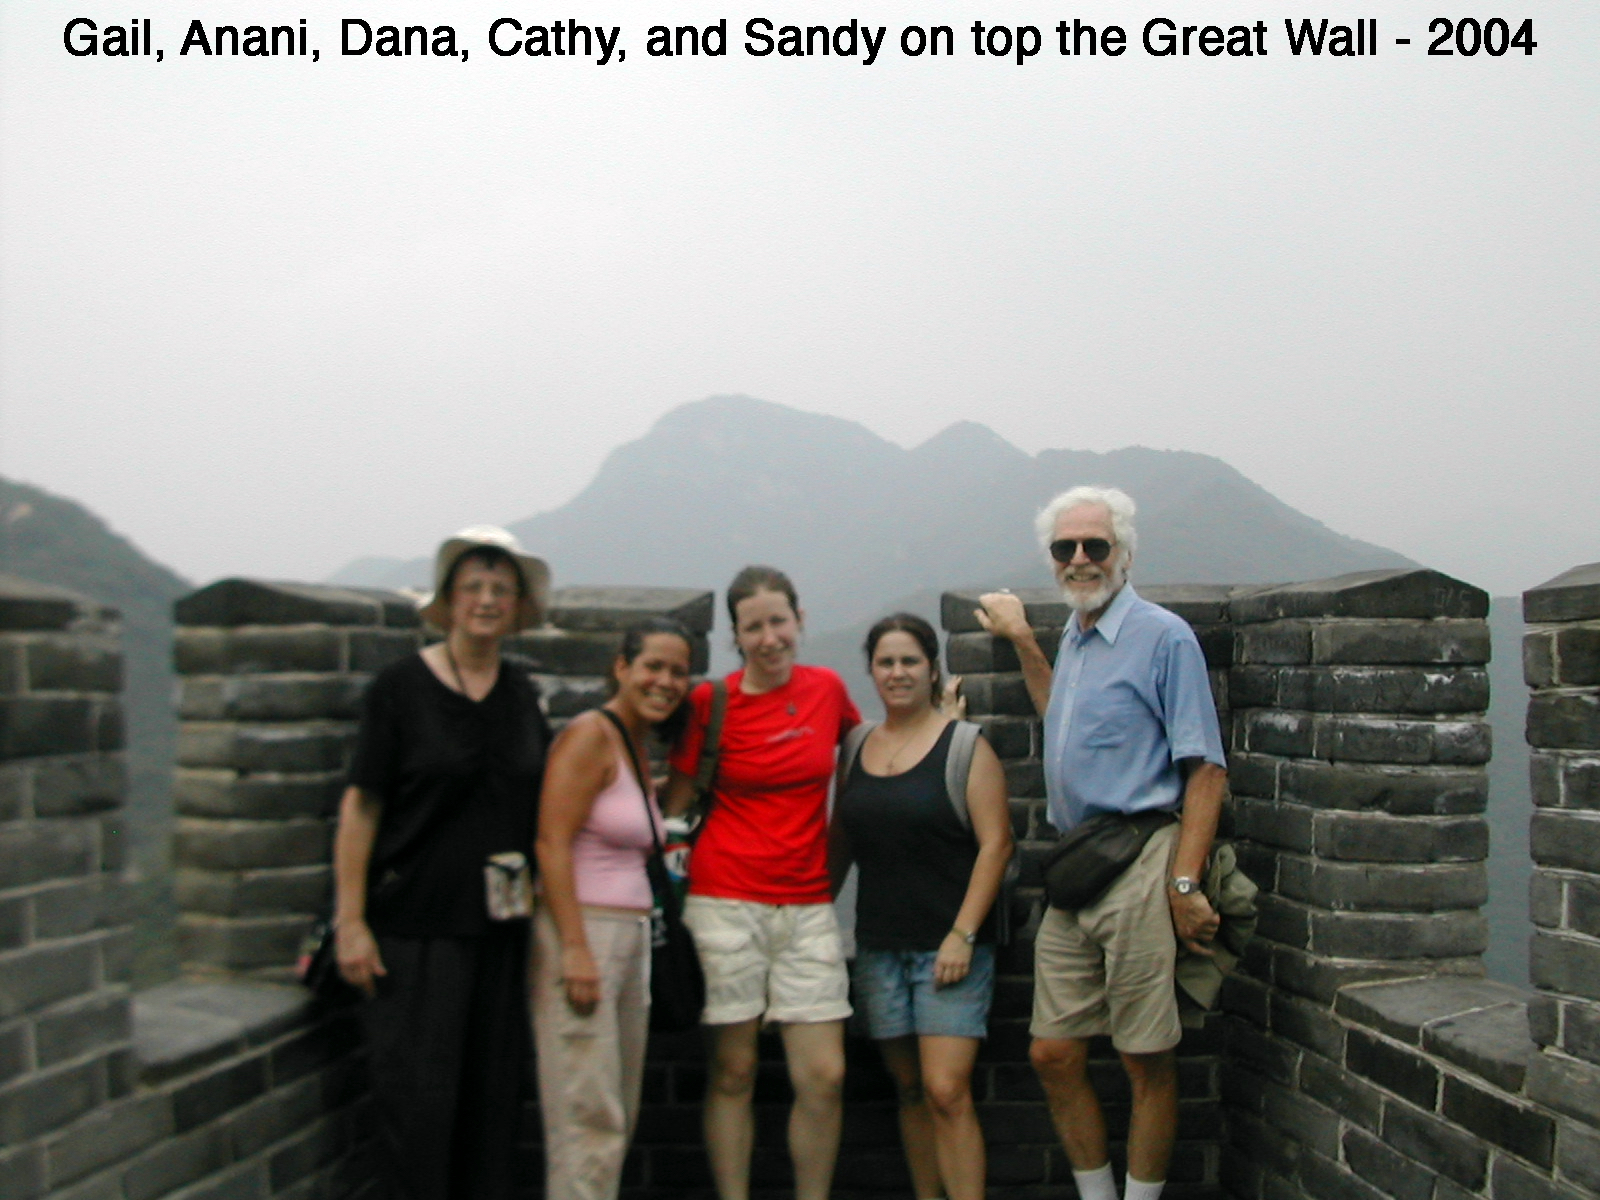 Gail Paton with her fellow teachers, Anani, Dana, Cathy, & Sandy on China's Great Wall